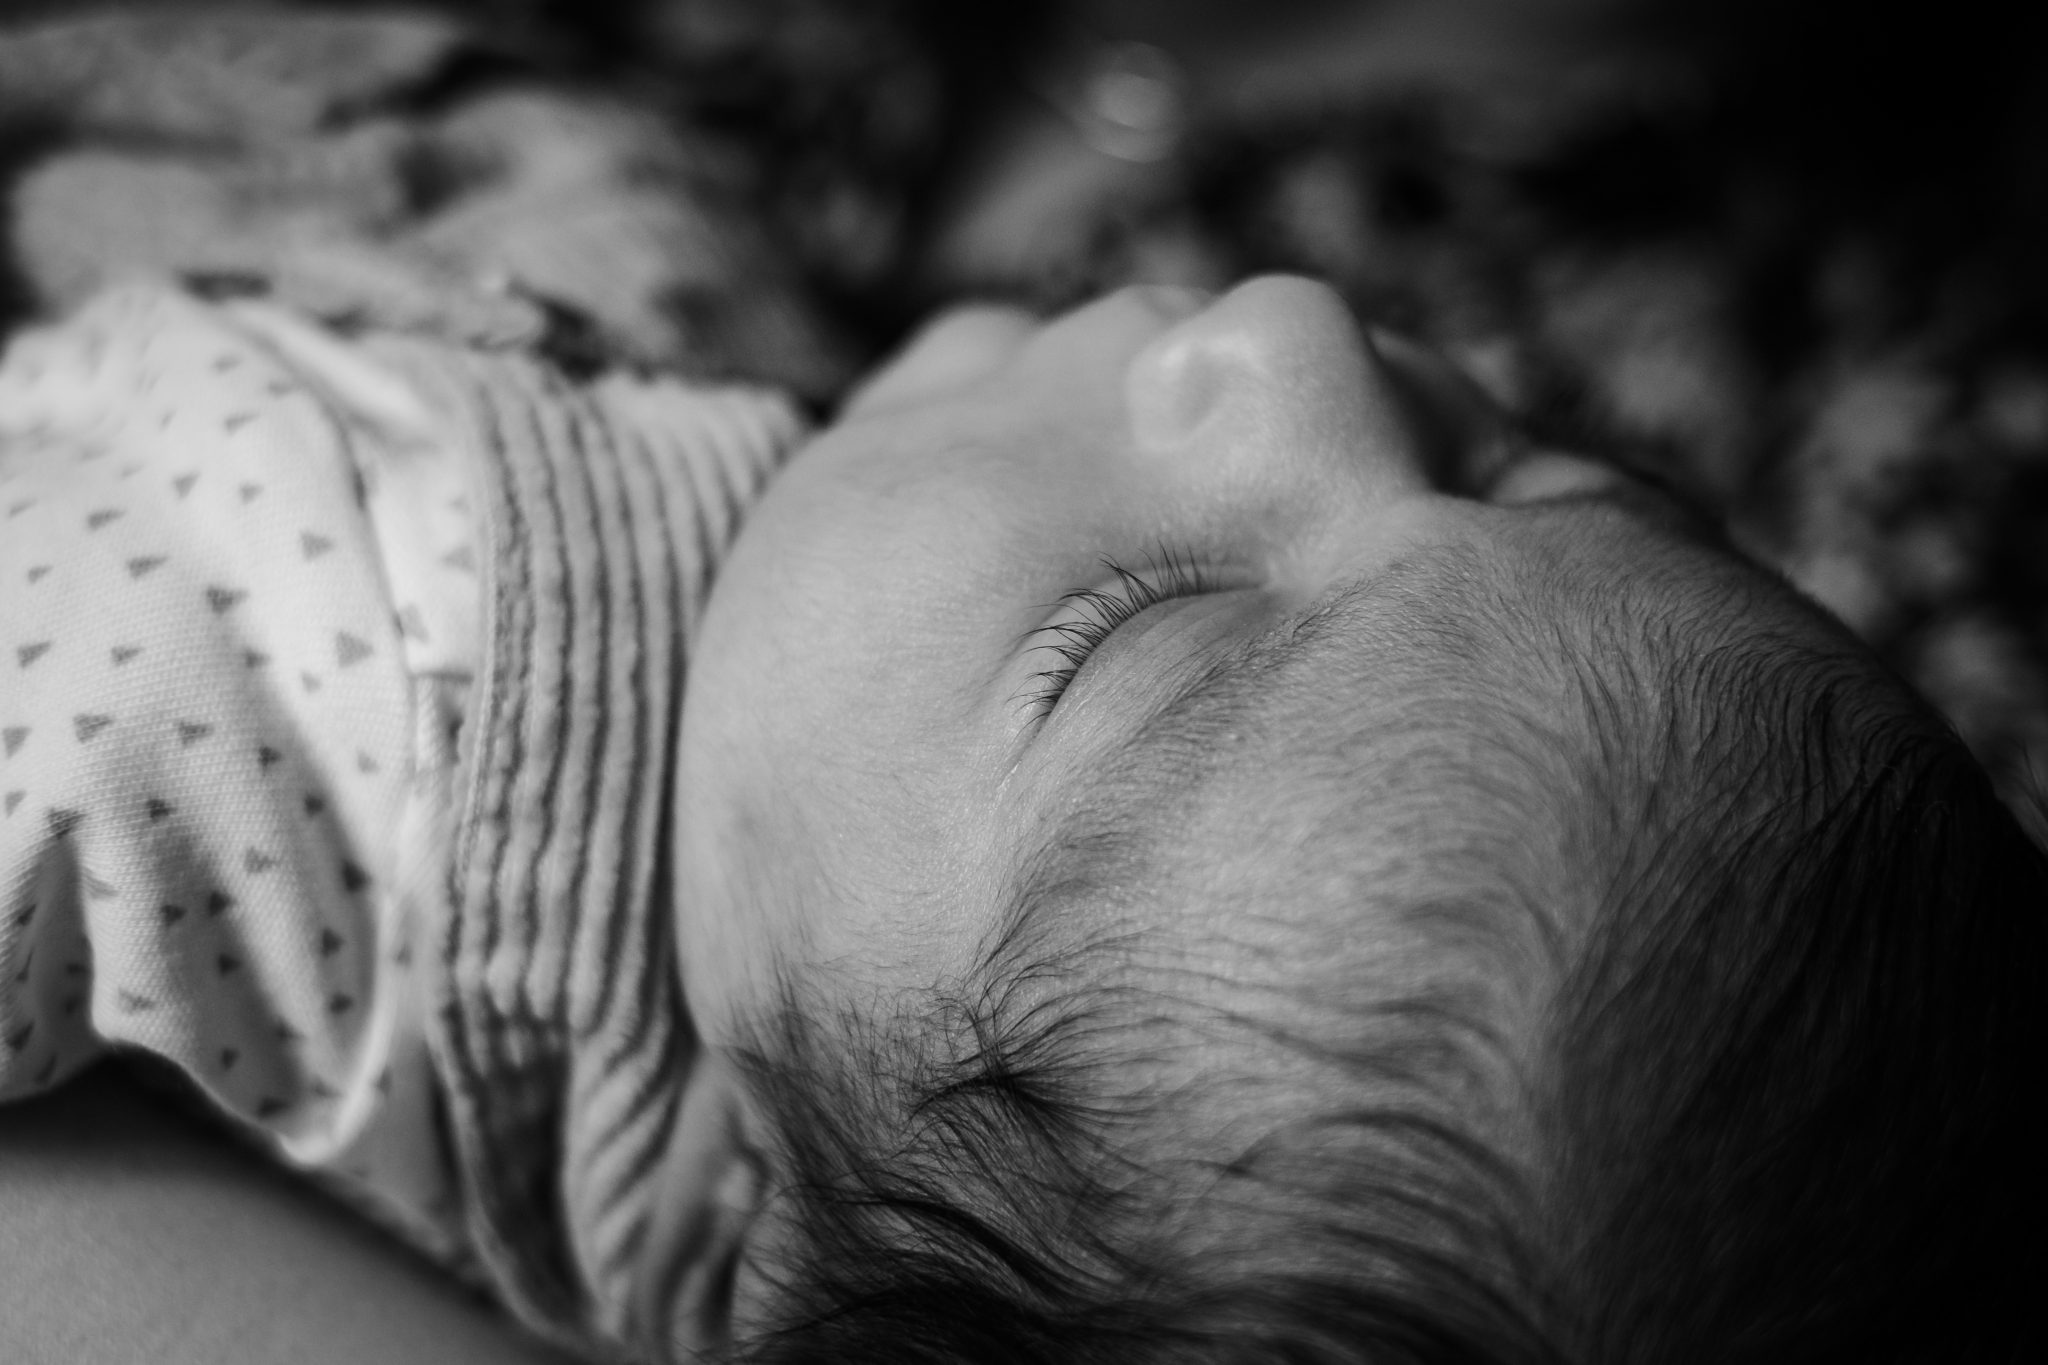 Cotswolds newborn photographer